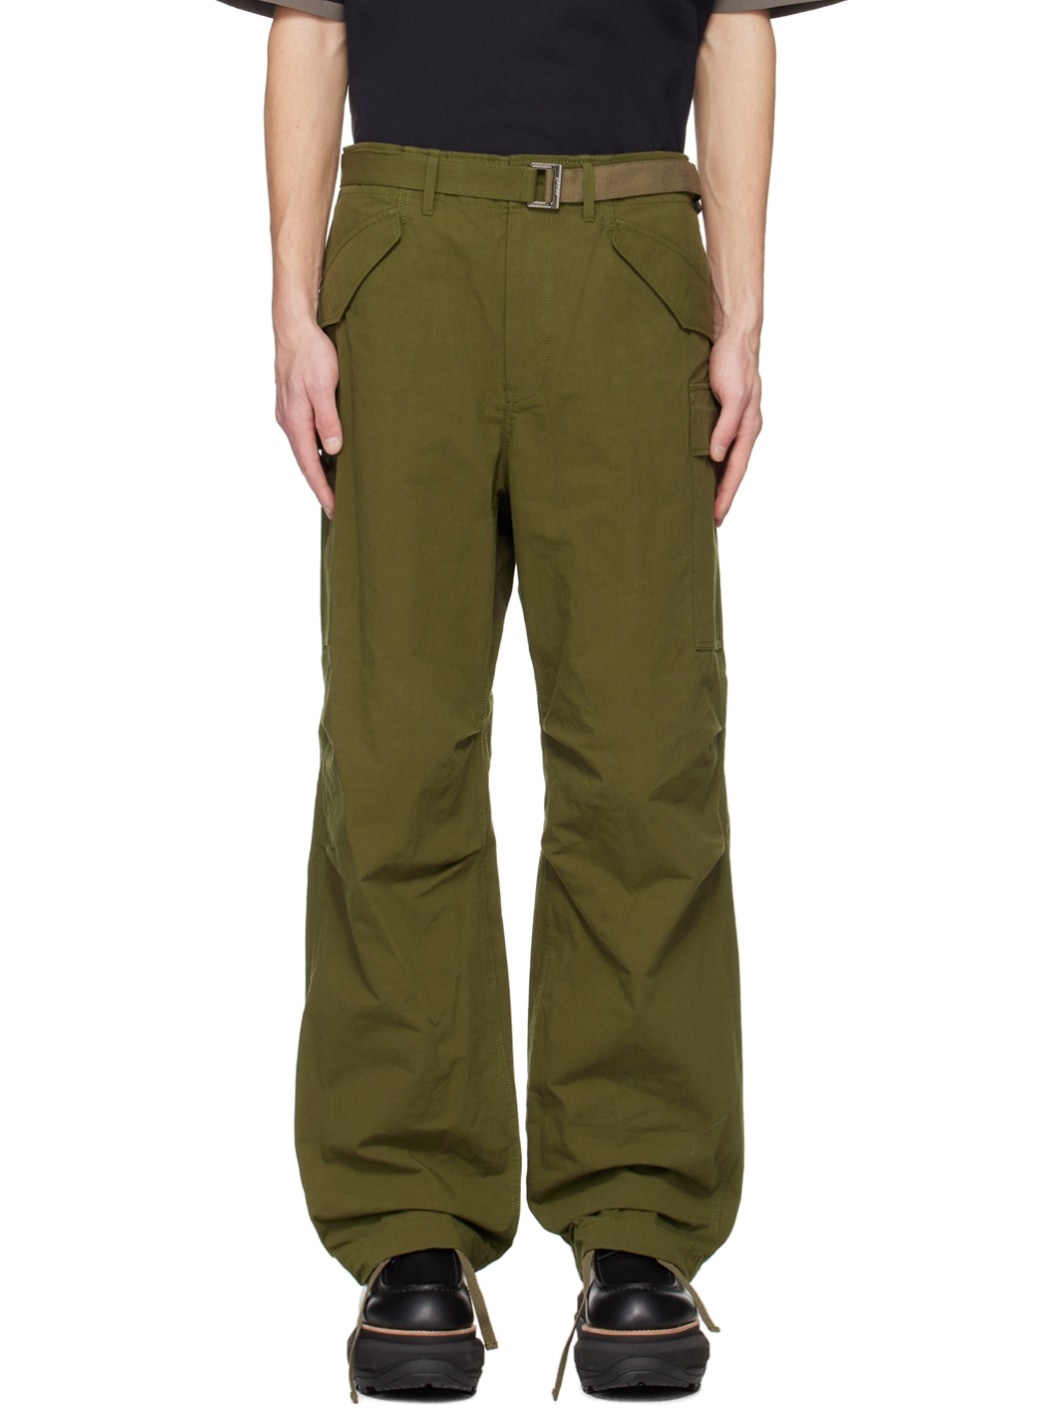 Khaki Cinch Cargo Pants - 1